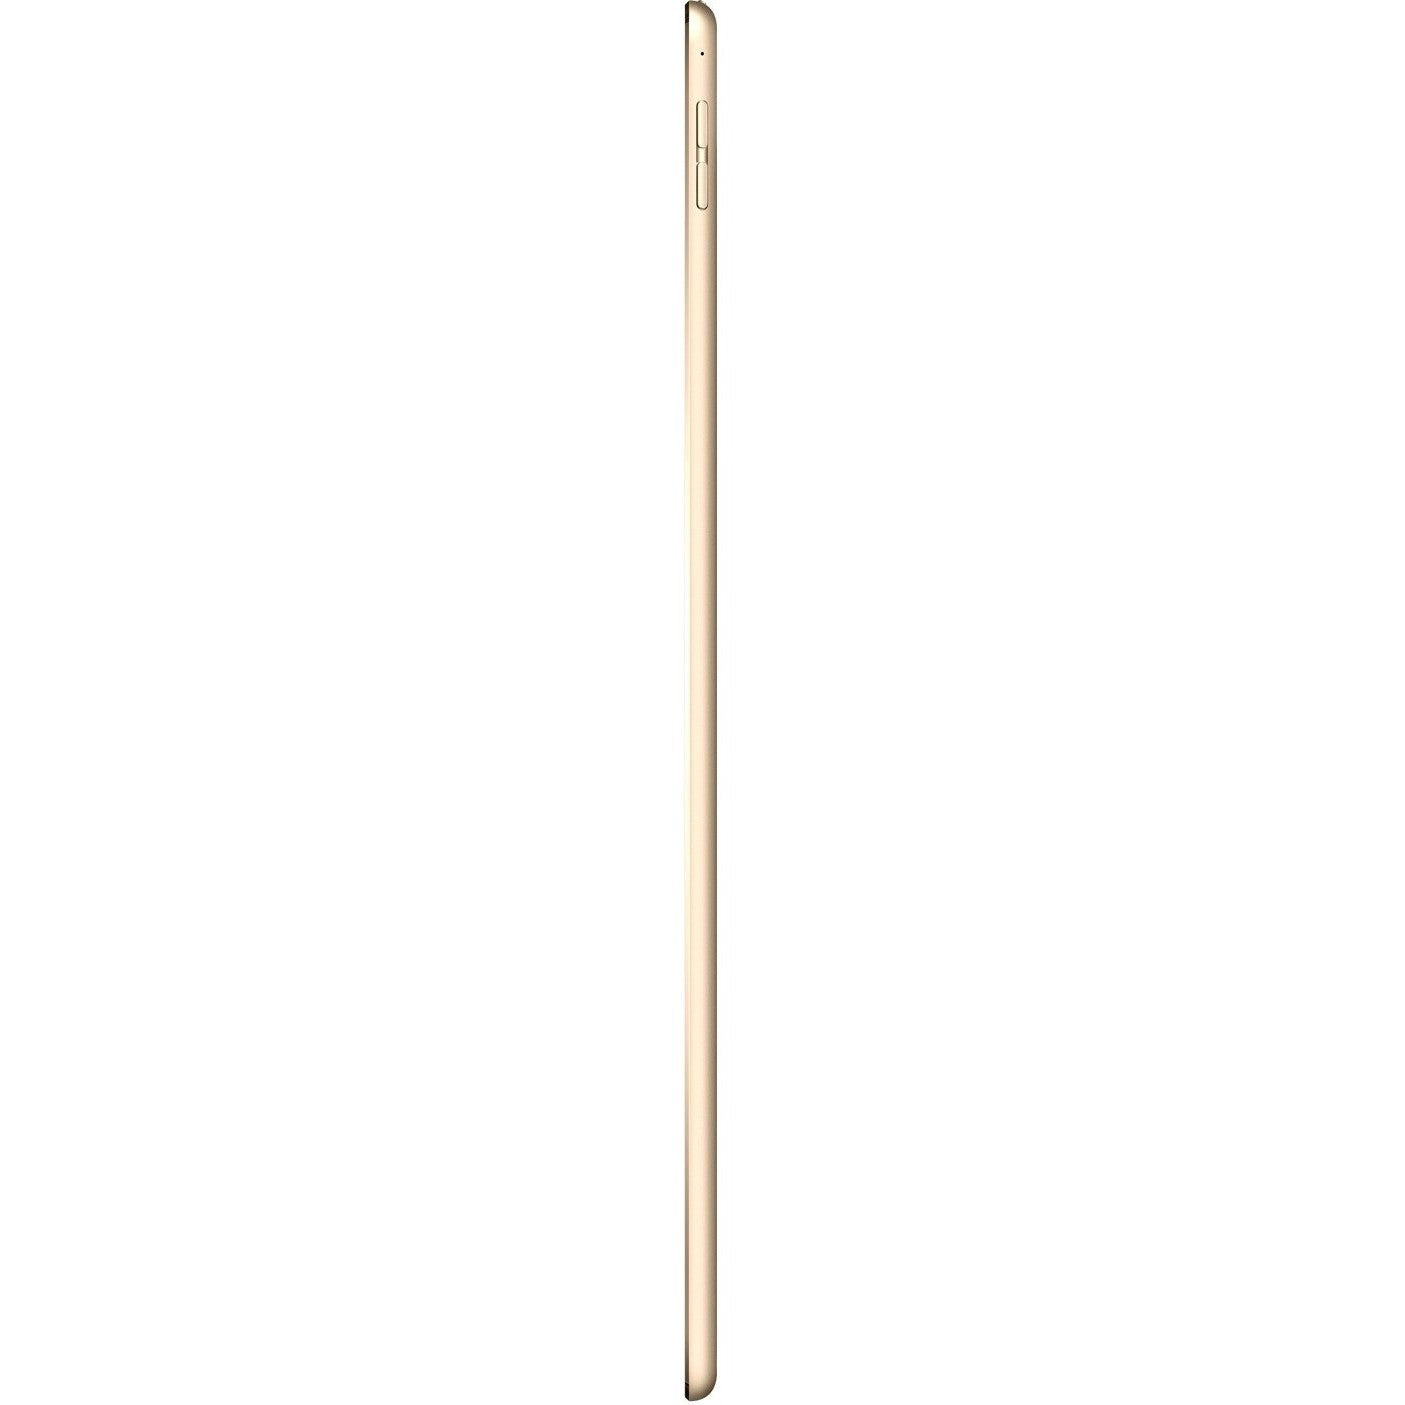 Apple iPad Pro Tablet - 12.9" - Apple A10X Hexa-core (6 Core) - 256 GB - iOS 10 - 2732 x 2048 - Retina Display - 4G - GSM, CDMA2000 Supported - Gold